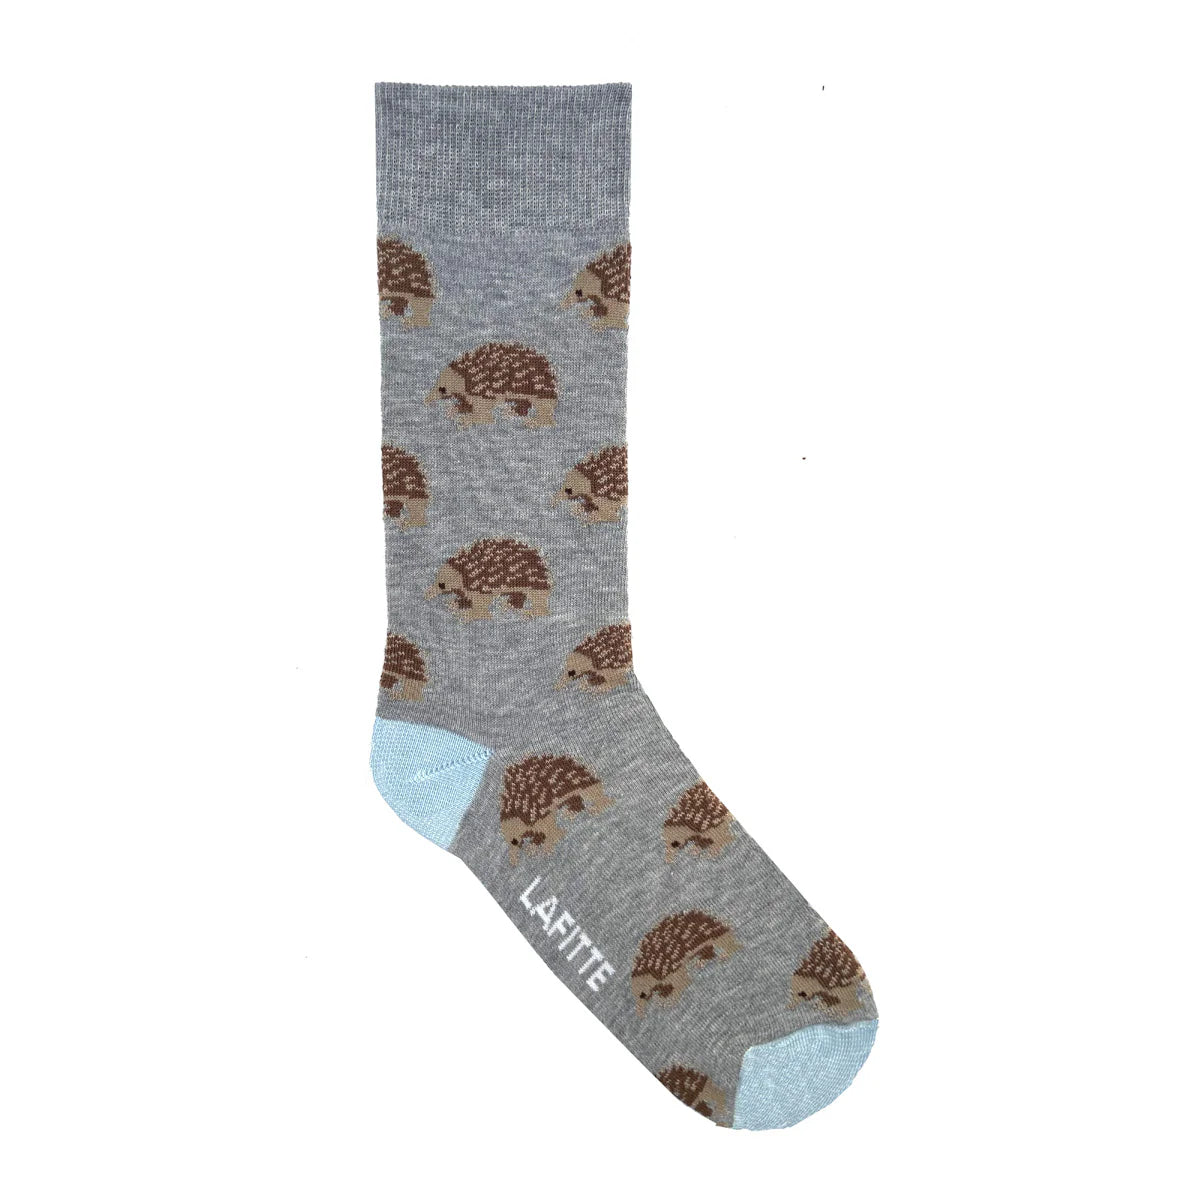 Echidna Marle Grey Socks